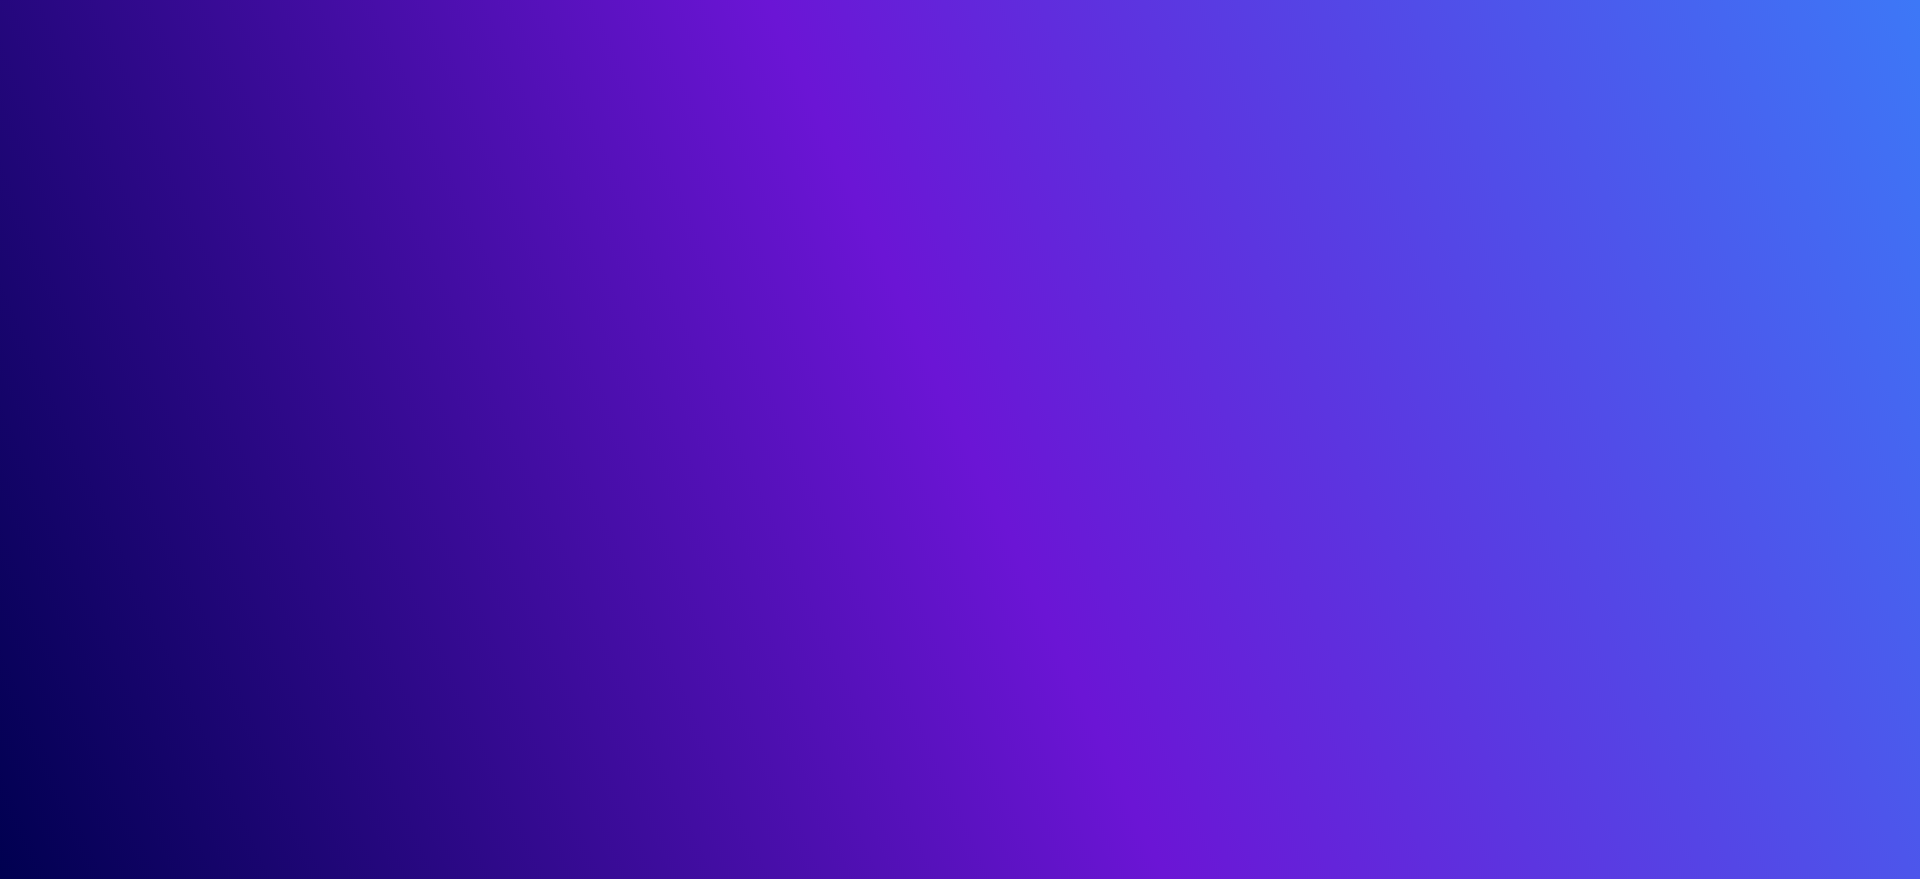 Background gradient blue to purple